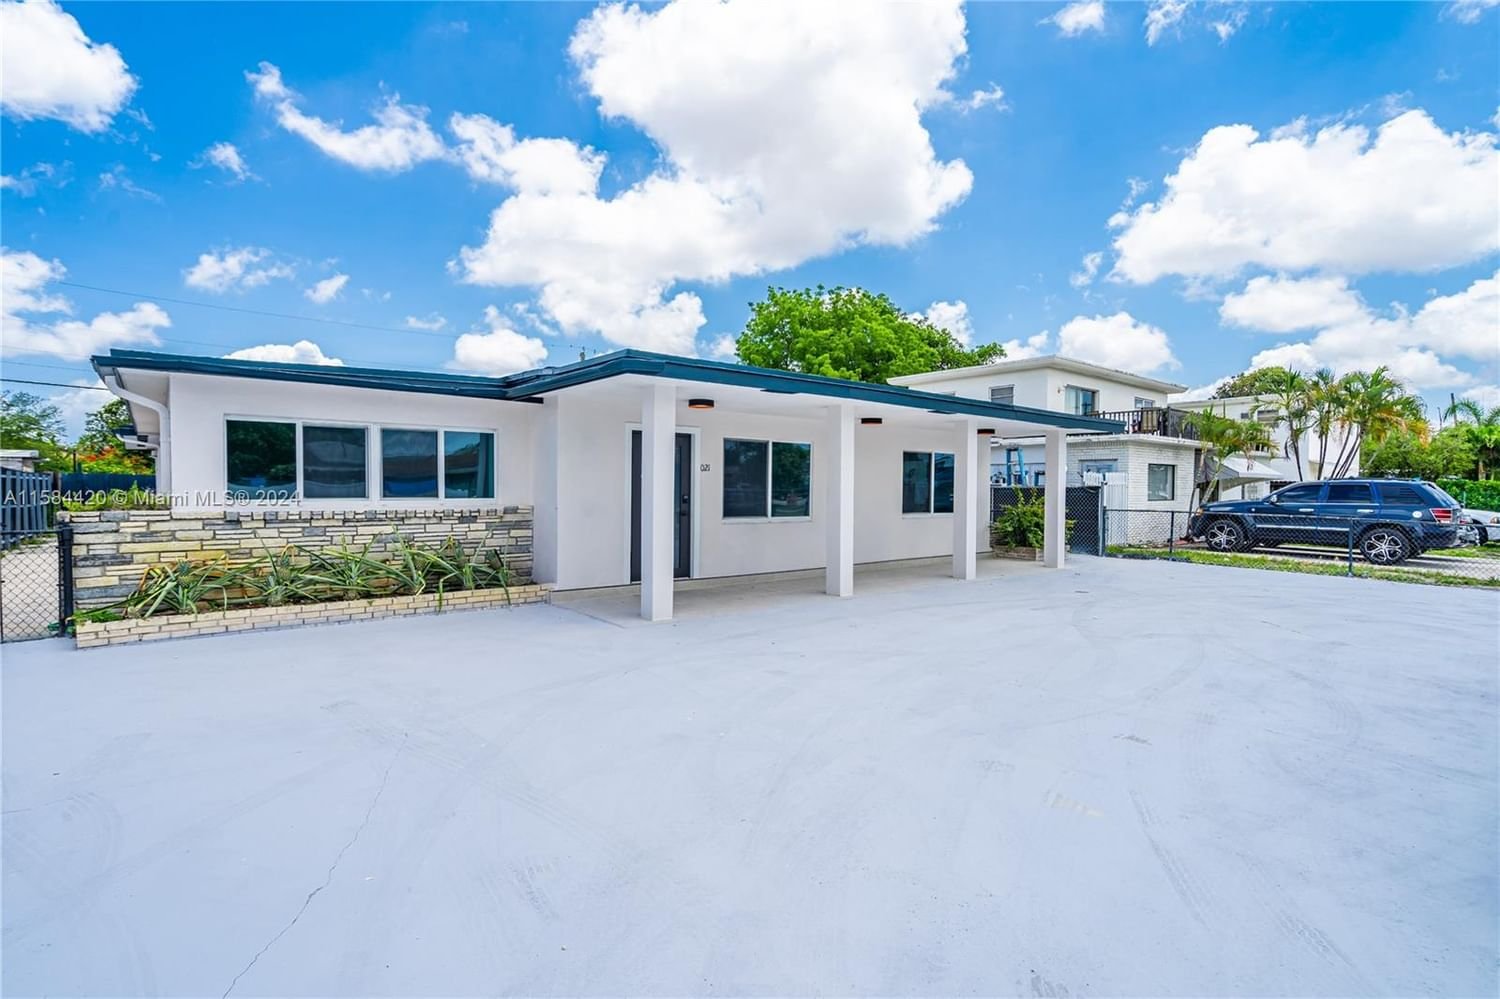 Real estate property located at 1021 6th Ave, Miami-Dade County, SUN-TAN VILLAGE SEC 3, Hialeah, FL